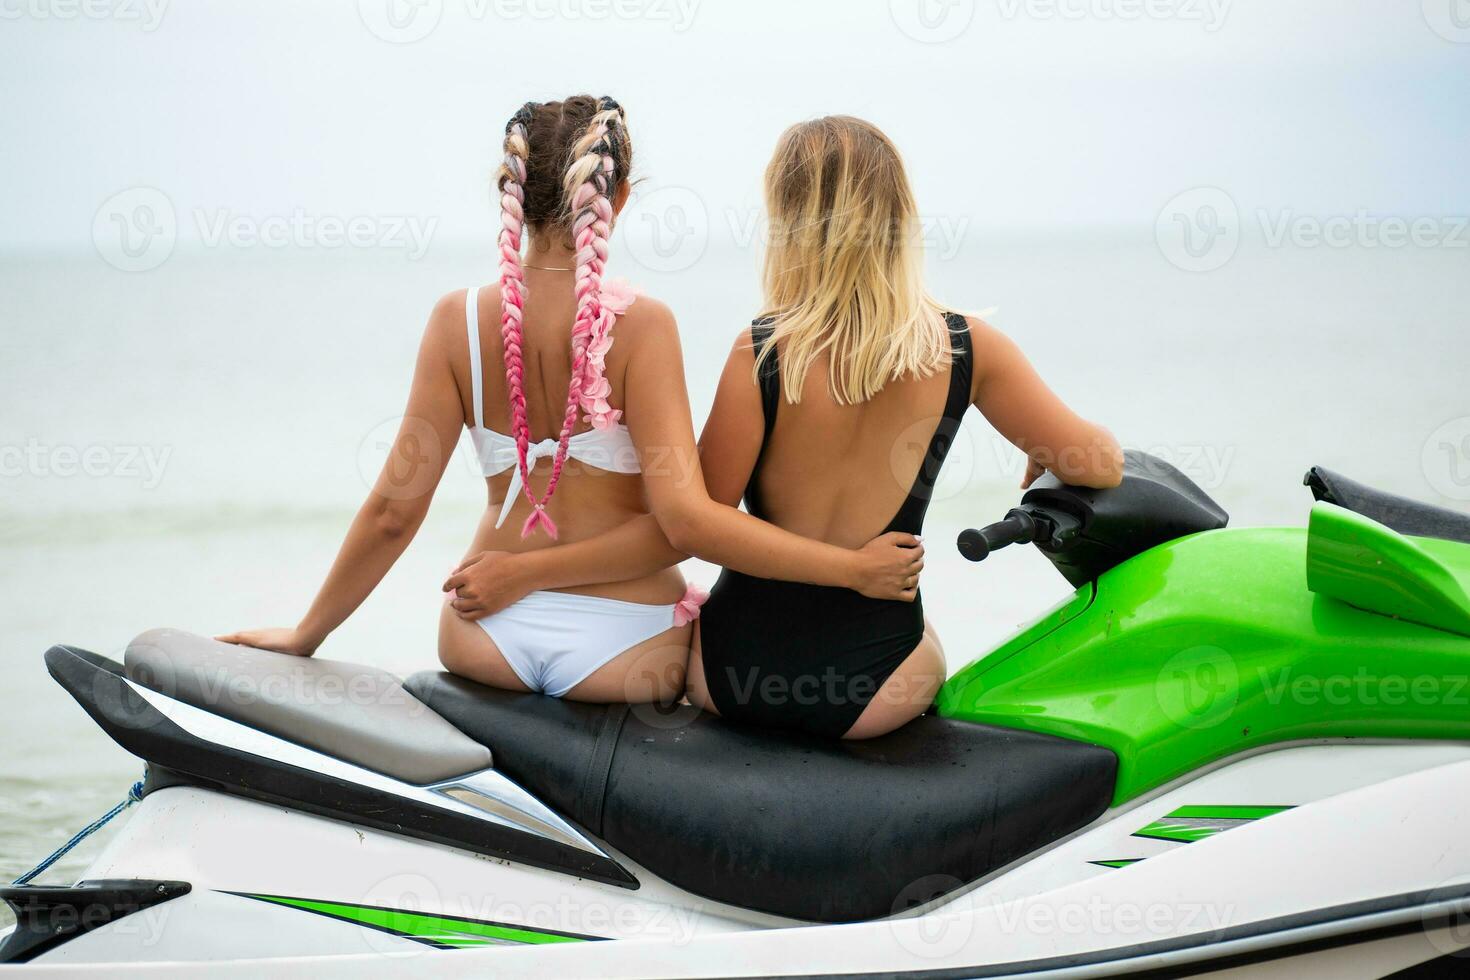 two sexy women in bikini on water scooter in sea summer style photo